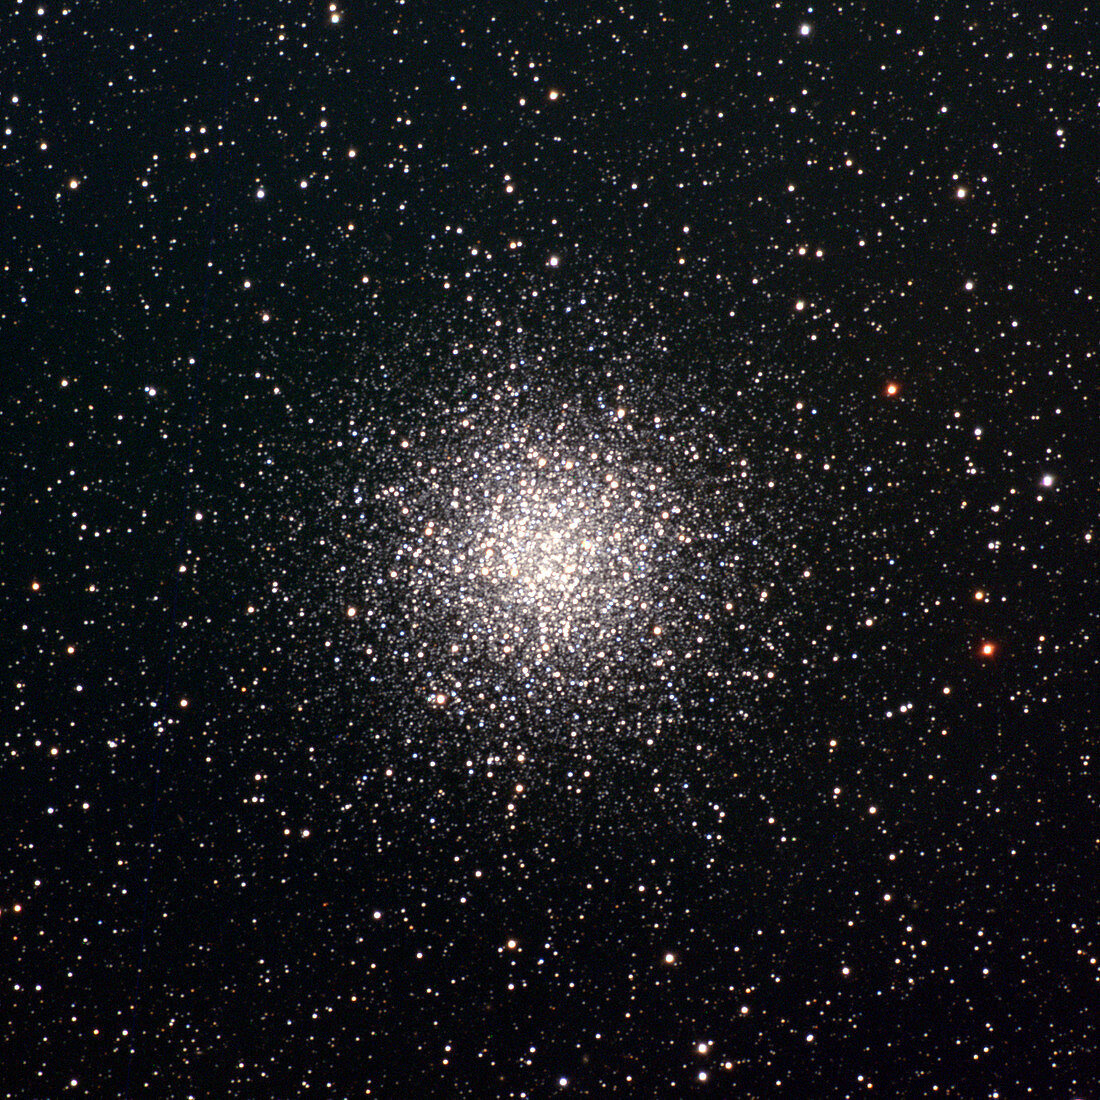 Globular cluster M55